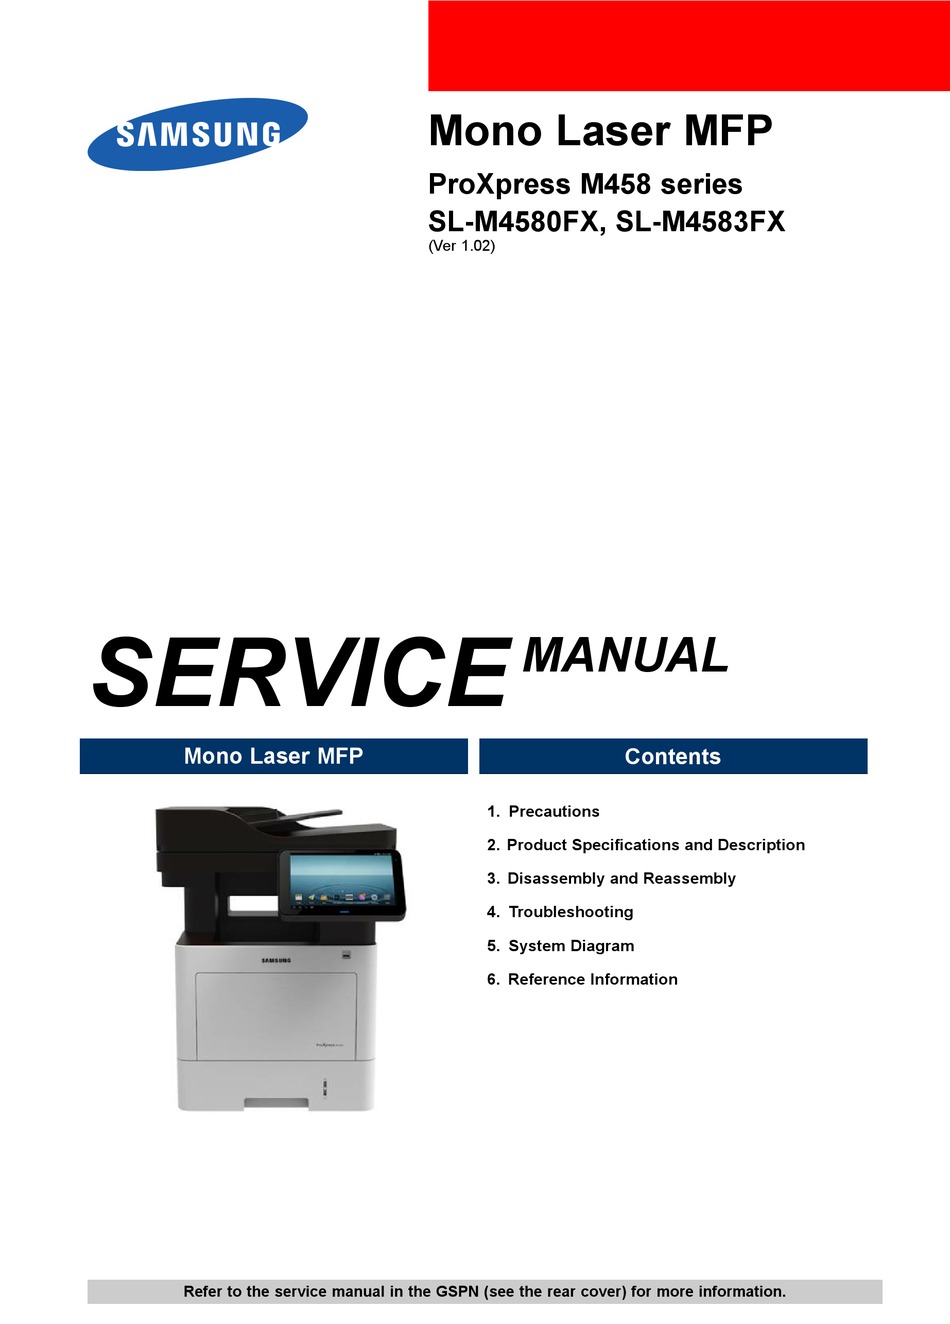 SAMSUNG SL-M4580FX SERVICE MANUAL Pdf Download | ManualsLib